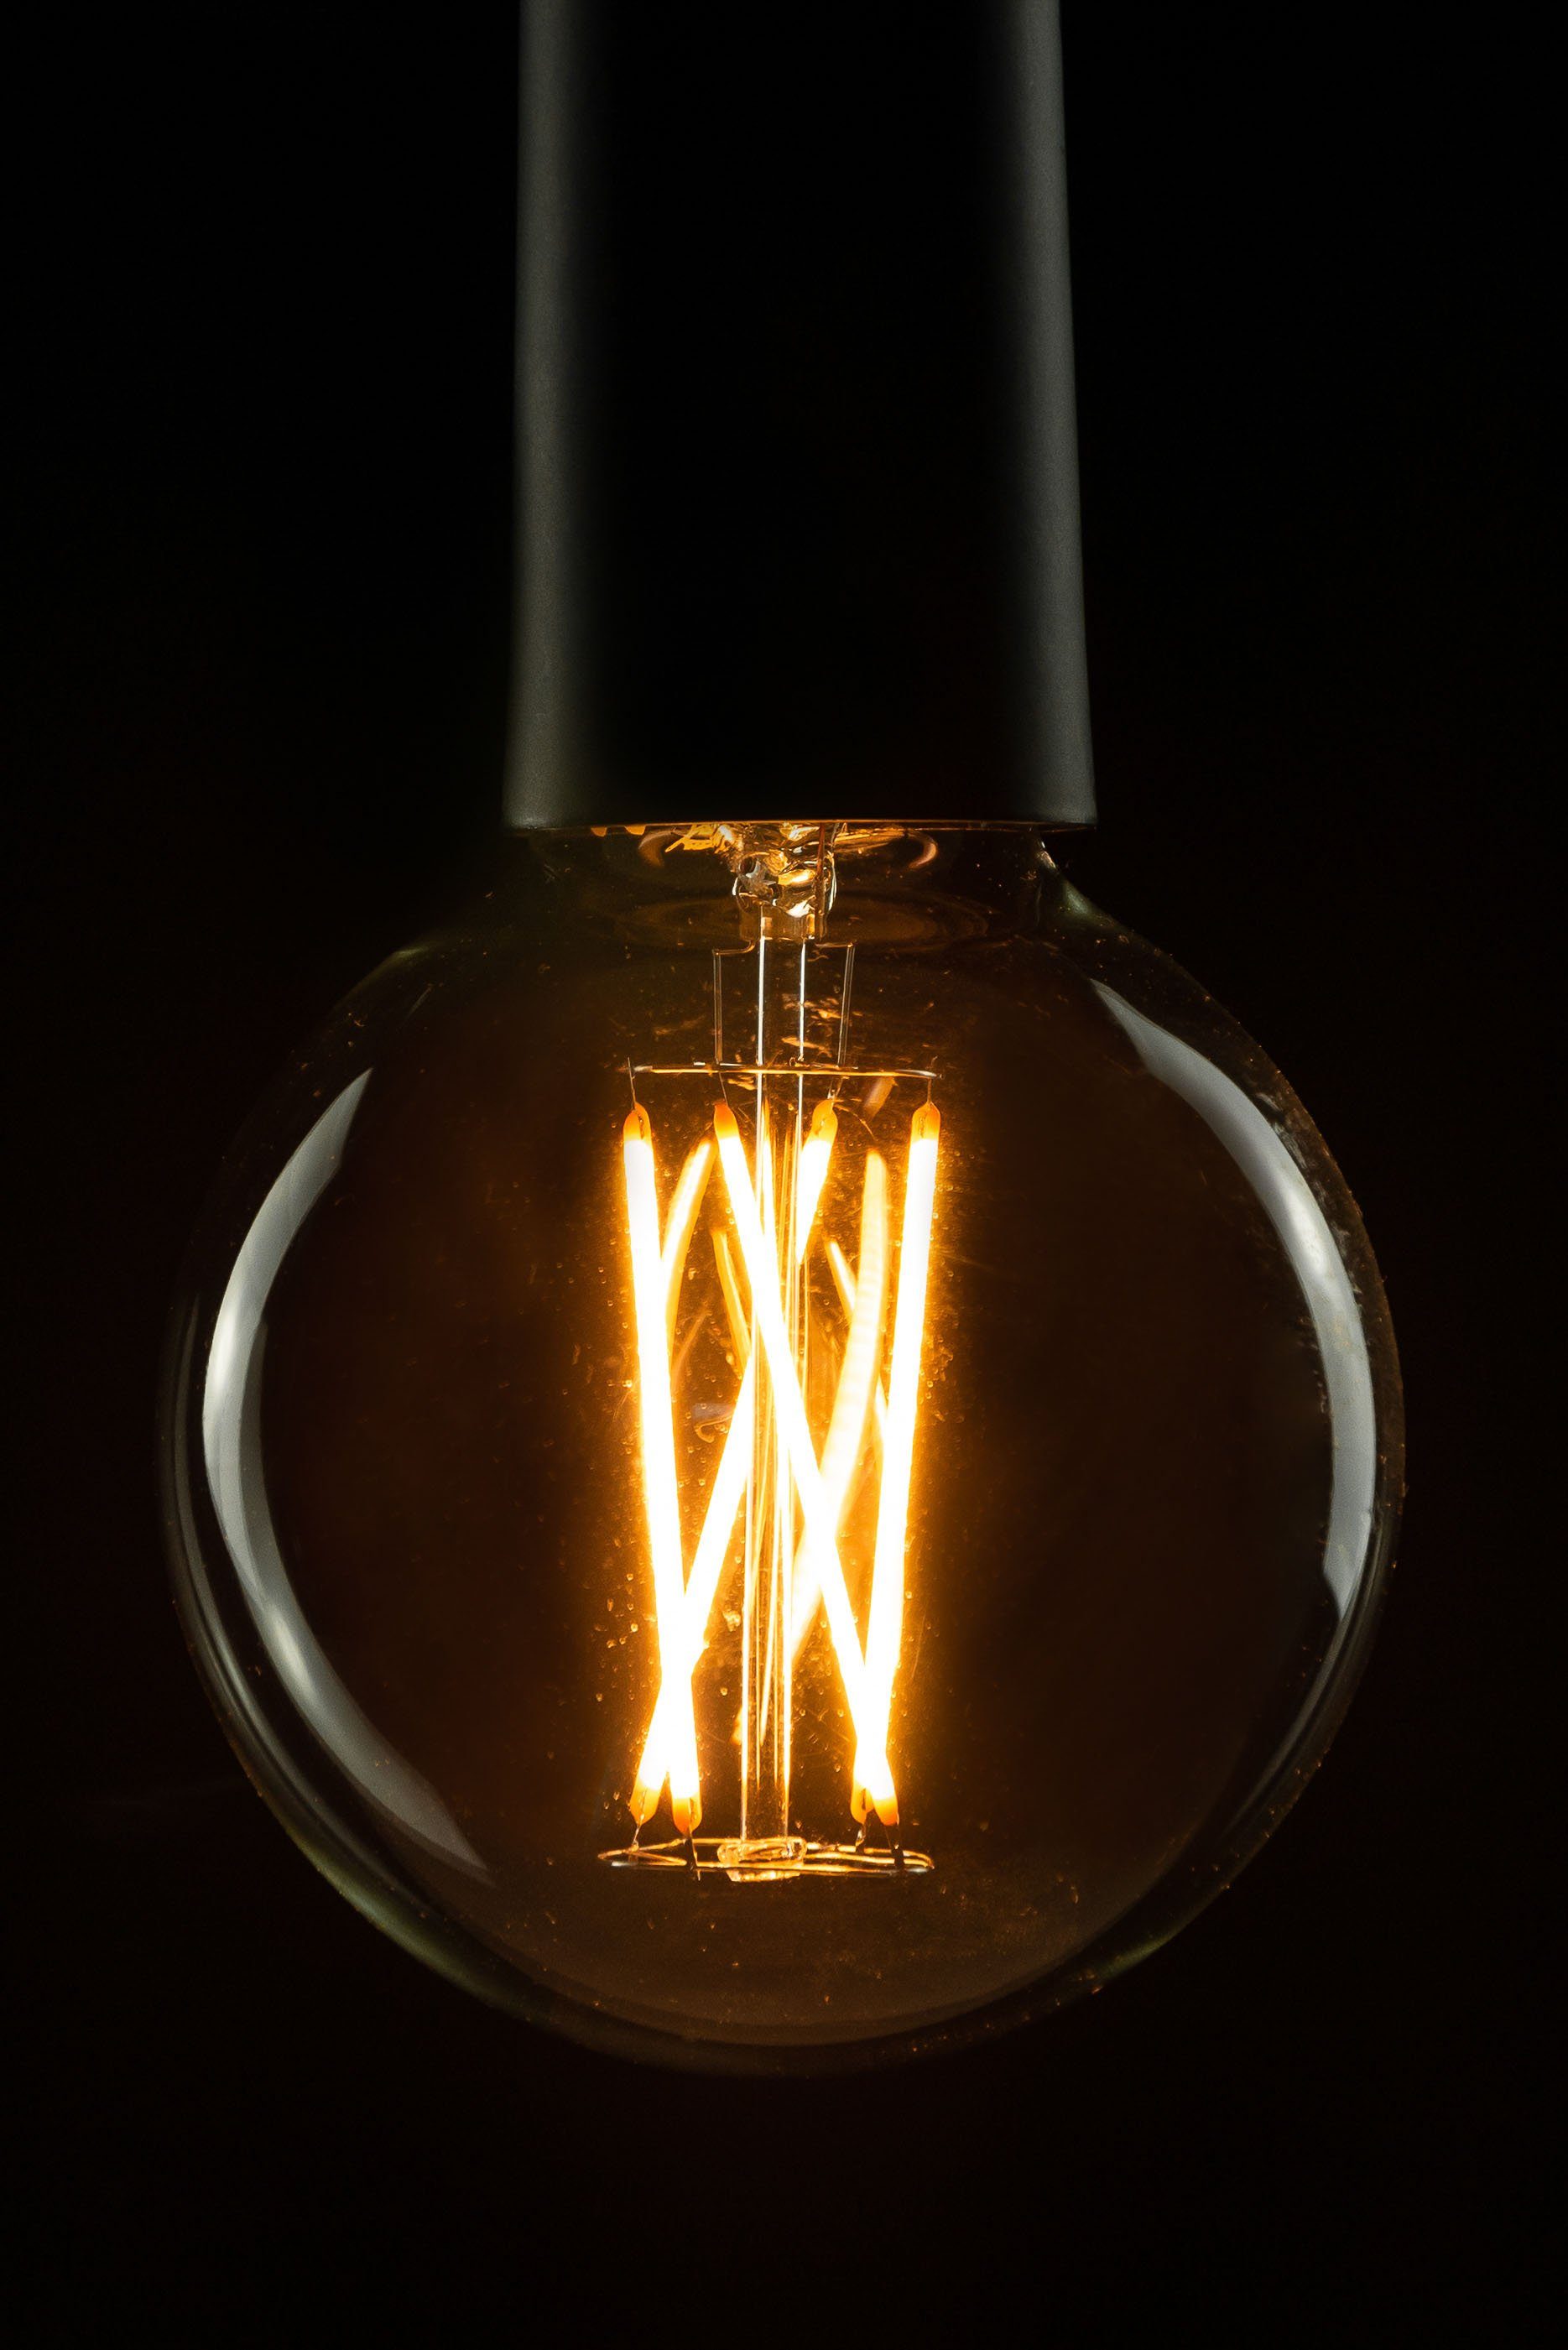 St., LED-Leuchtmittel klar- E27 95 Globe Line, Warmweiß, SEGULA scherbensicher, dimmbar, Vintage E27, 1